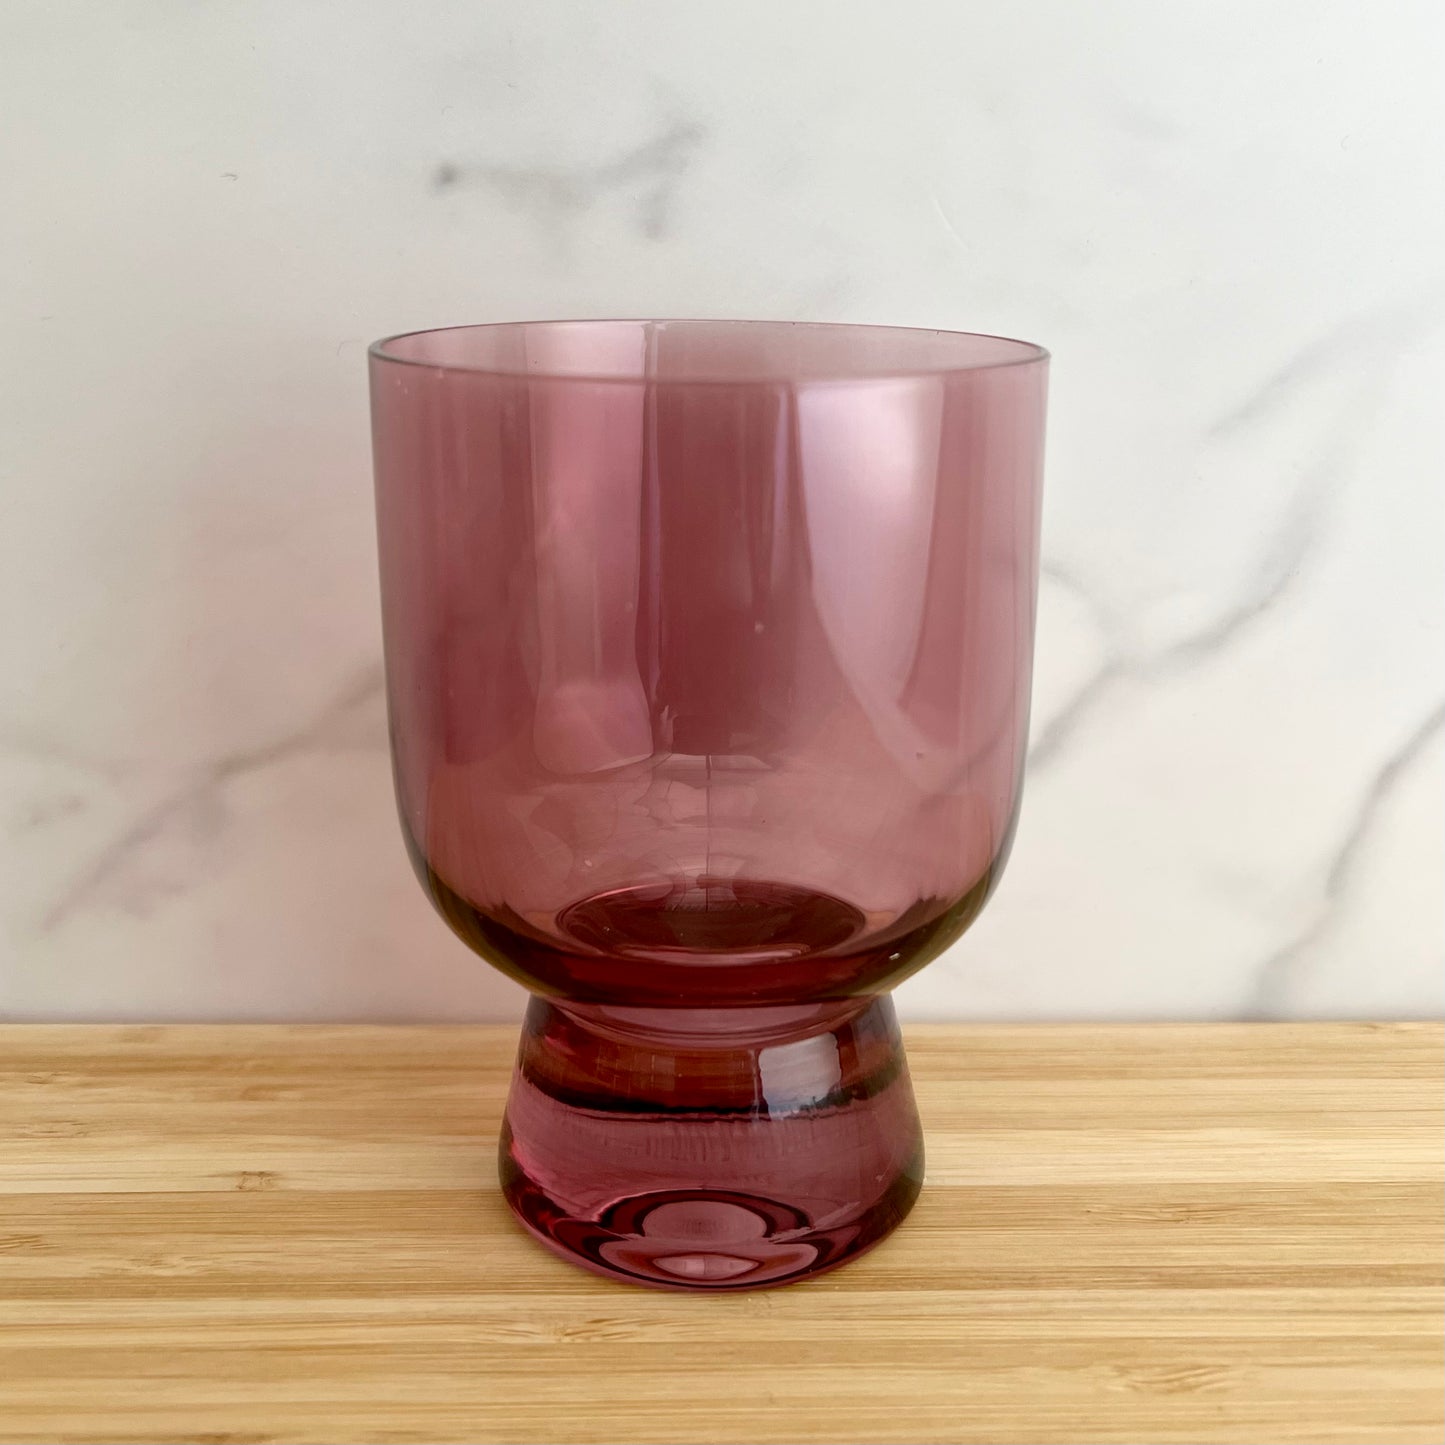 drinkingglass